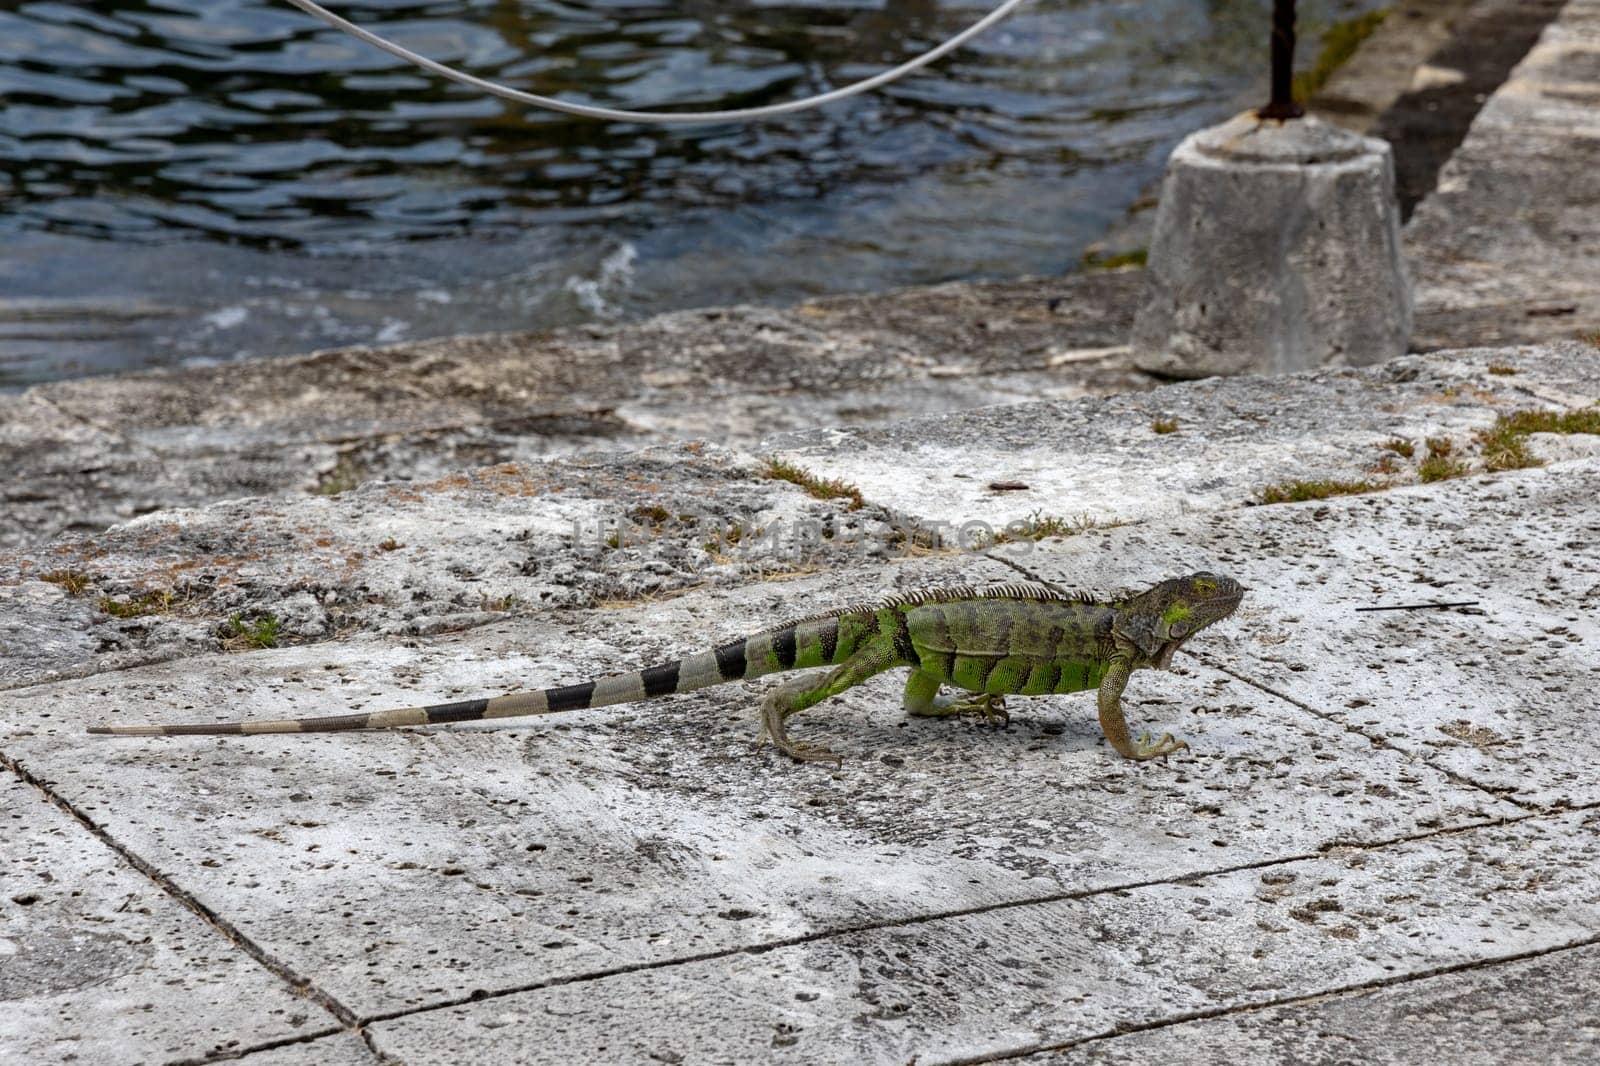 Green exotic iguana on asphalt road, wild reptilian, tropical animal. by Khosro1